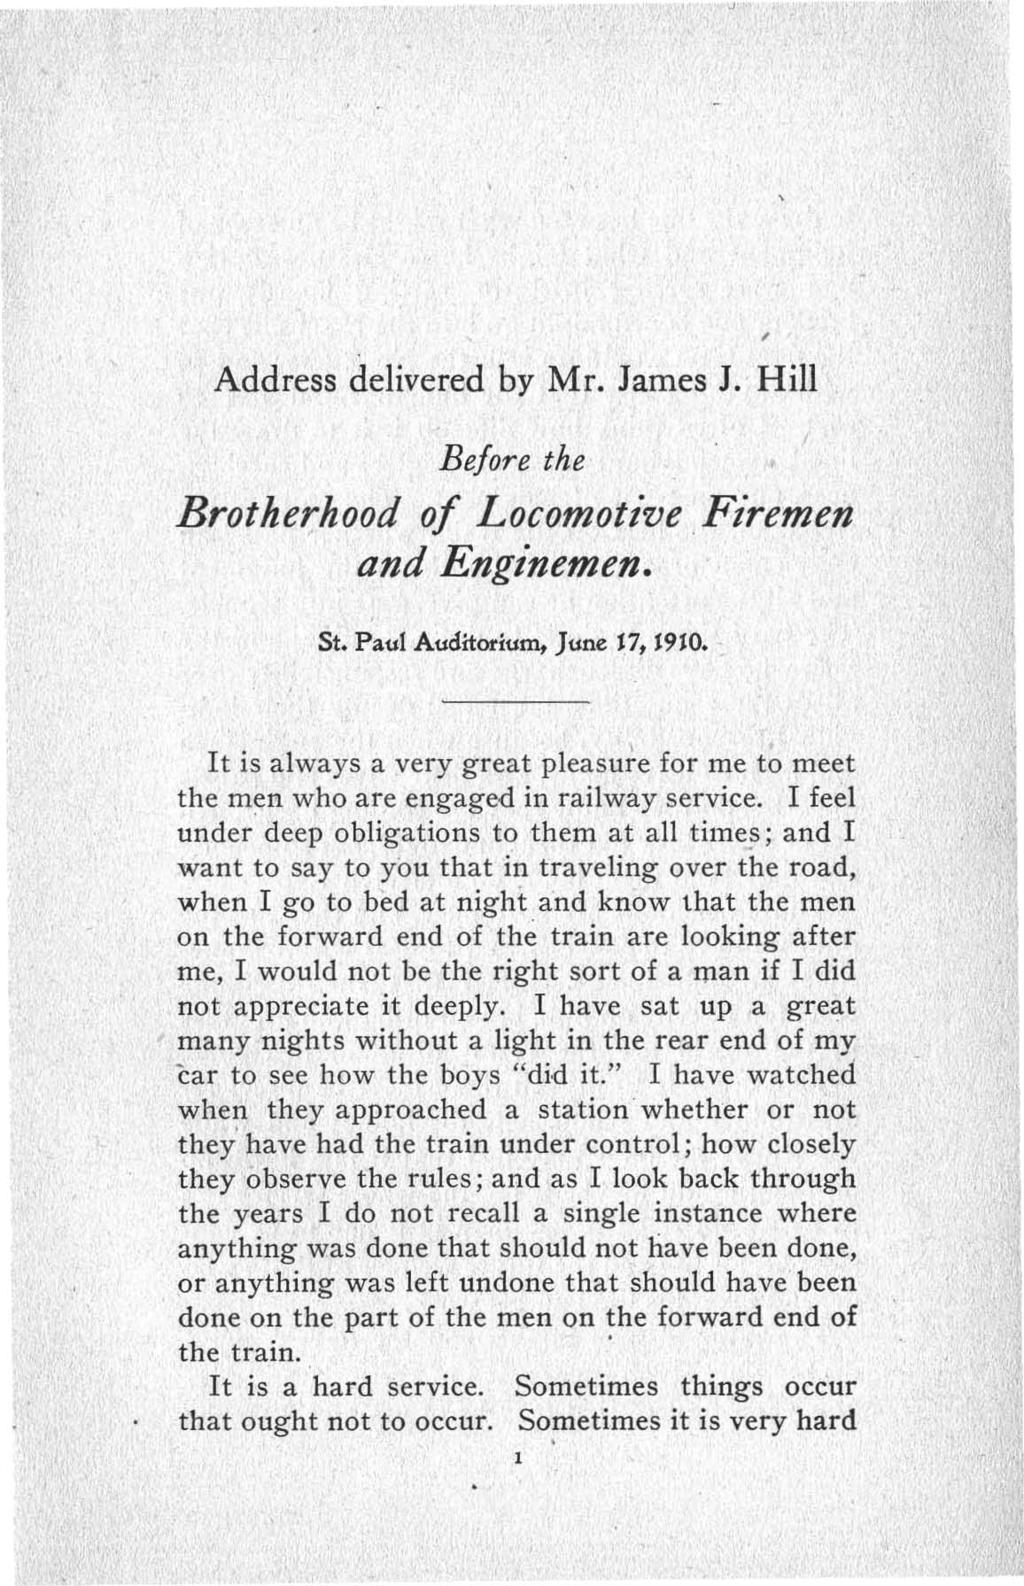 Address delivered by Mr. James J. Hill Be/ore the Brotherhood of Locomotive, Firemen and Enginemen. St. Paul Auditorium, June J7, J9m.